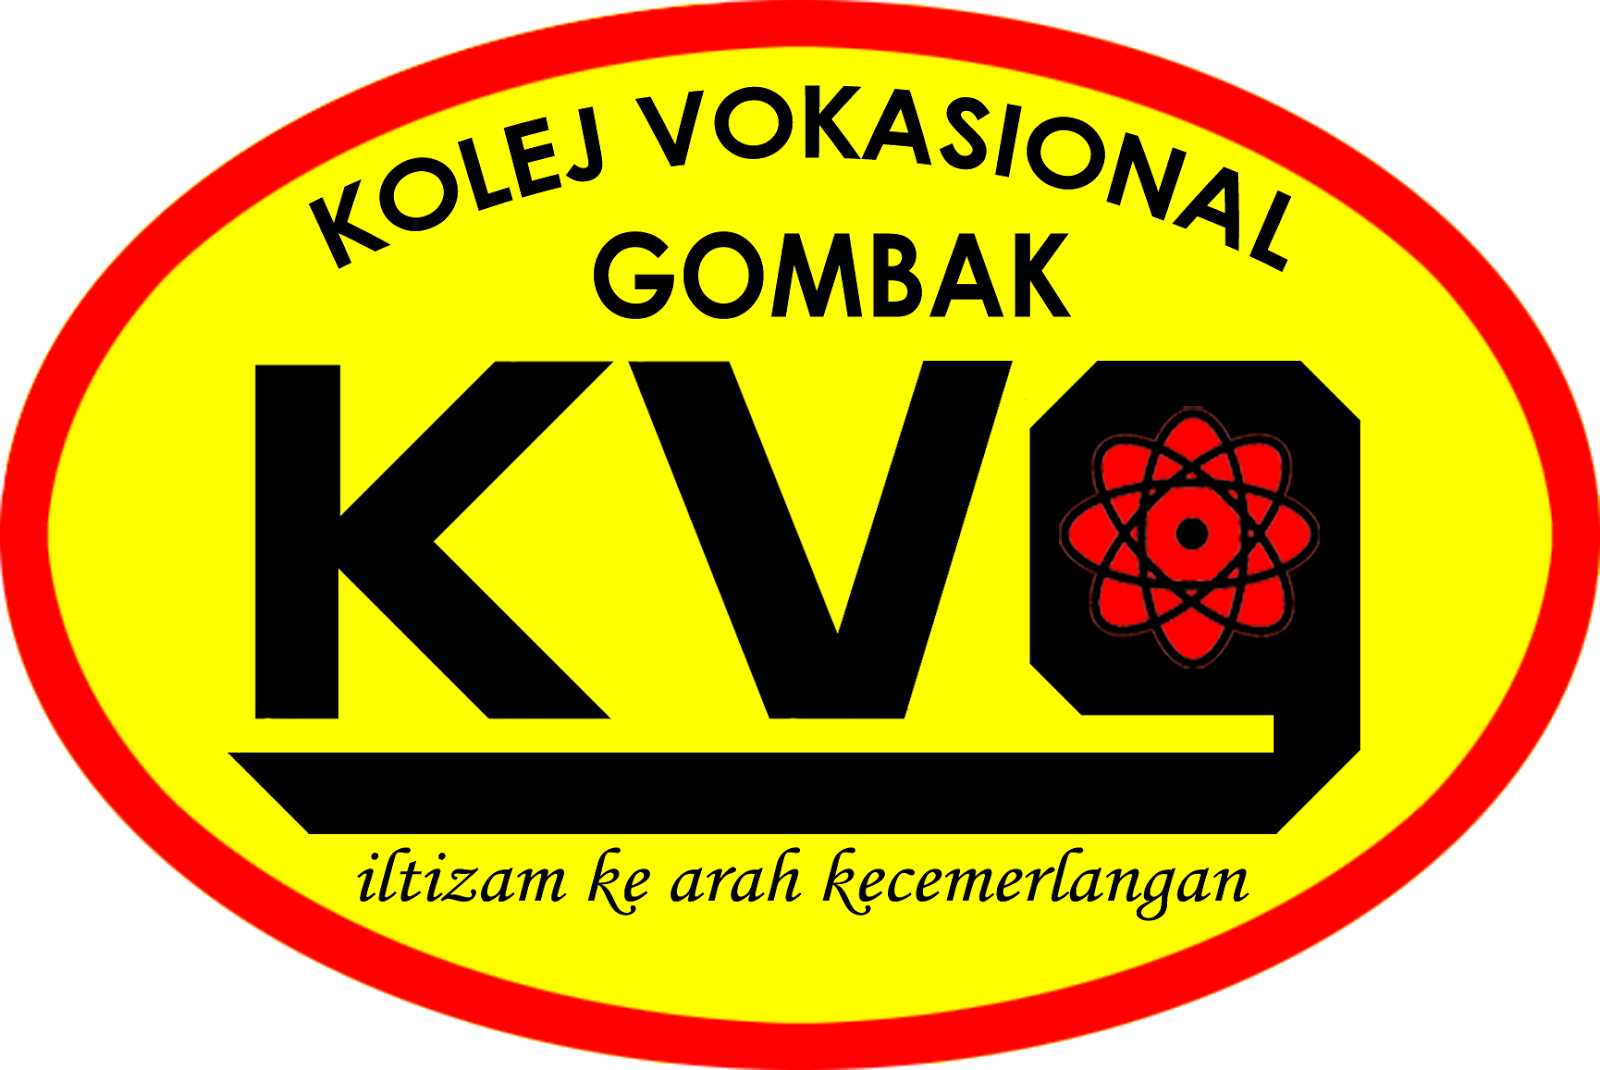 Logo Kolej Vokasional Gombak ~ Kolej Vokasional Gombak